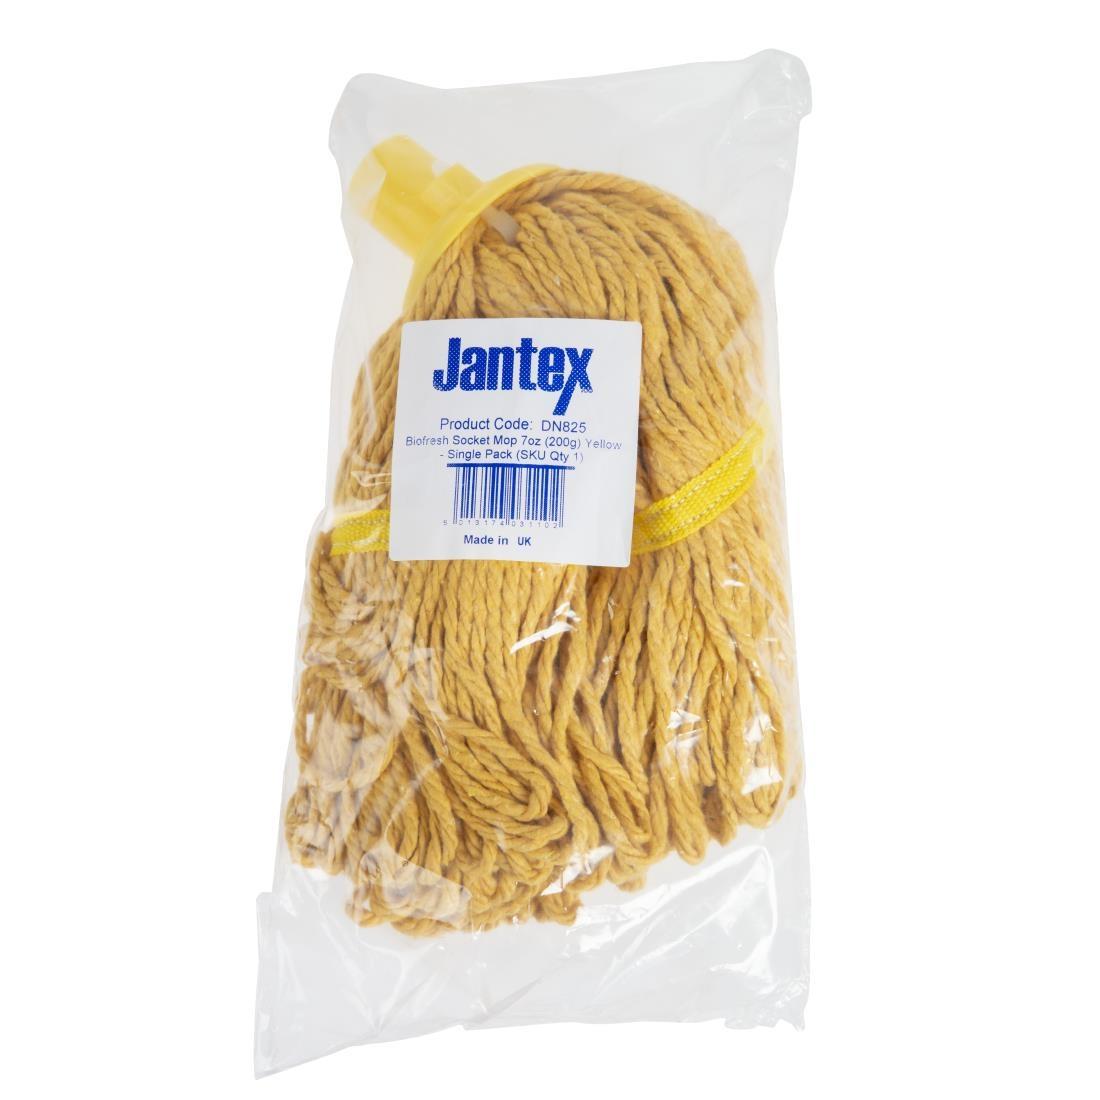 Jantex Bio Fresh Socket Mop Head Yellow - DN825  - 7